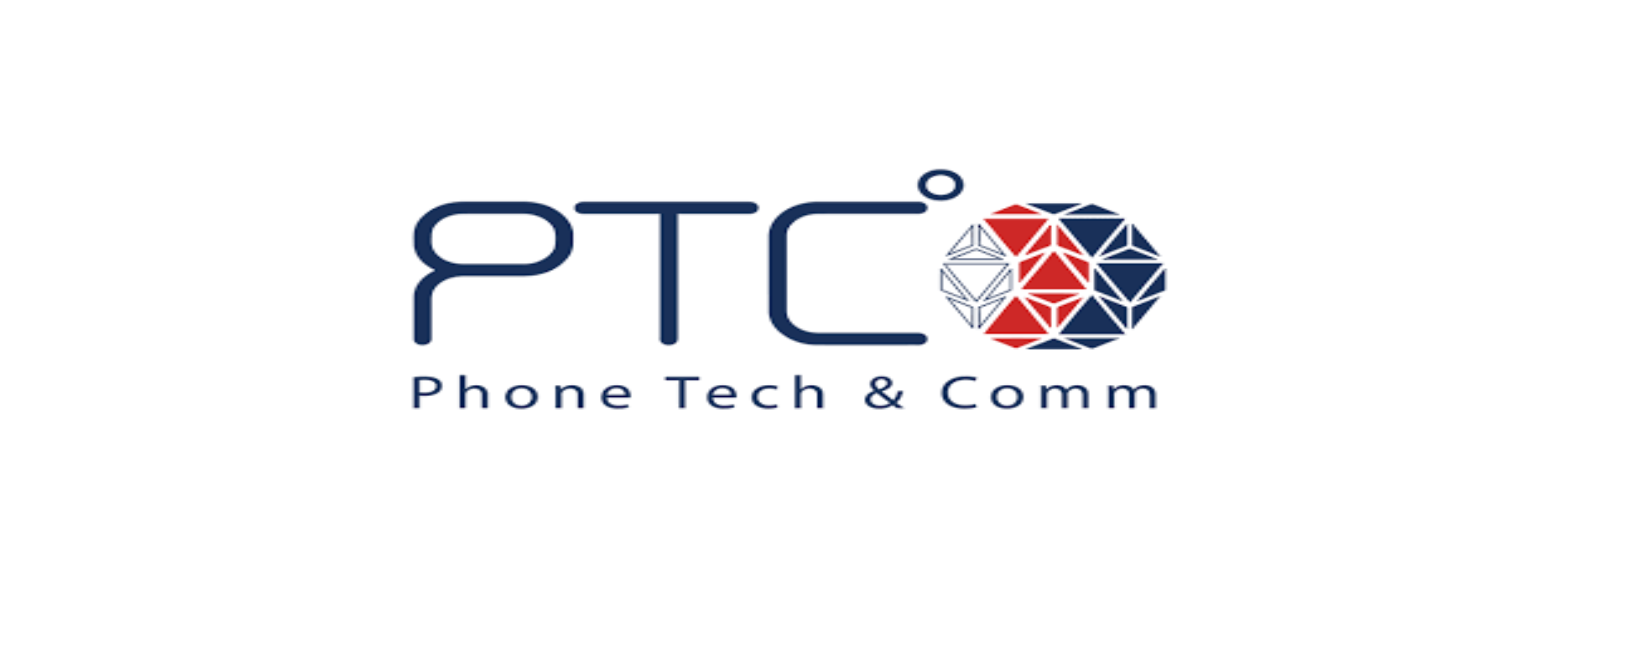 PTC Phone Tech & Comm AU Discount Code 2022